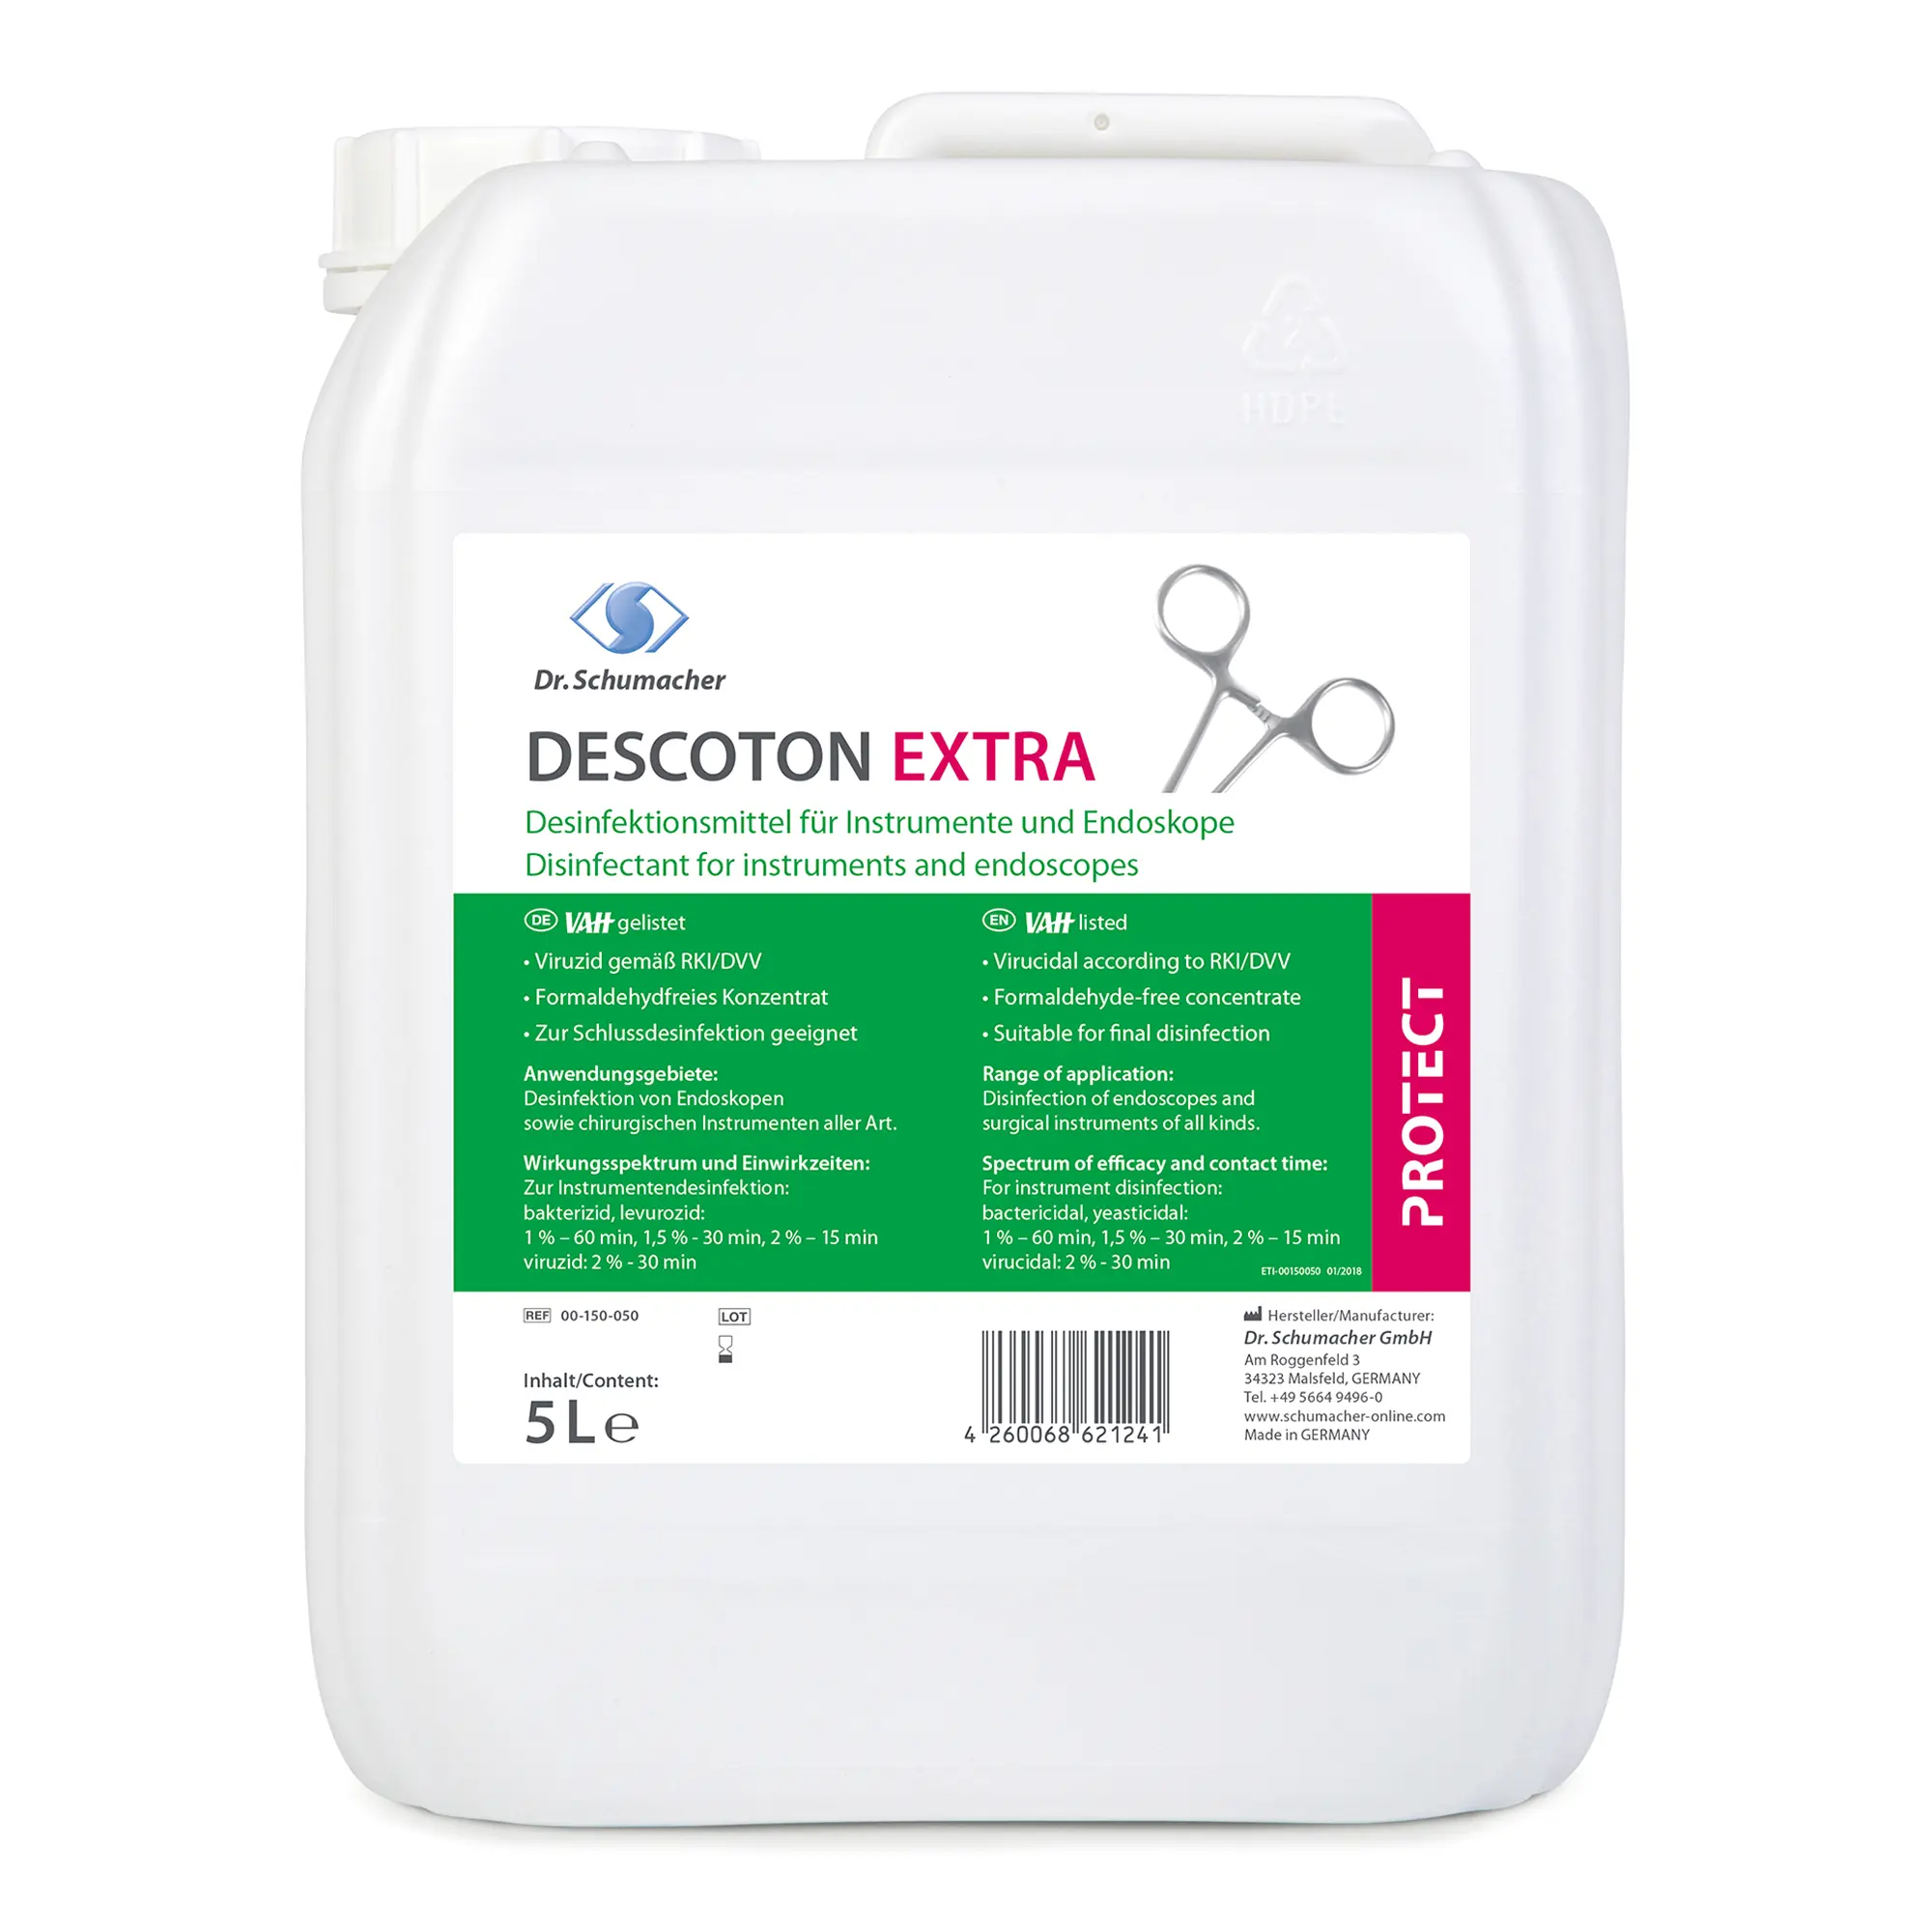 Dr. Schumacher Descoton extra Desinfektionsmittel Instrumente Endoskope 5 Liter Kanister 00-150-050_1